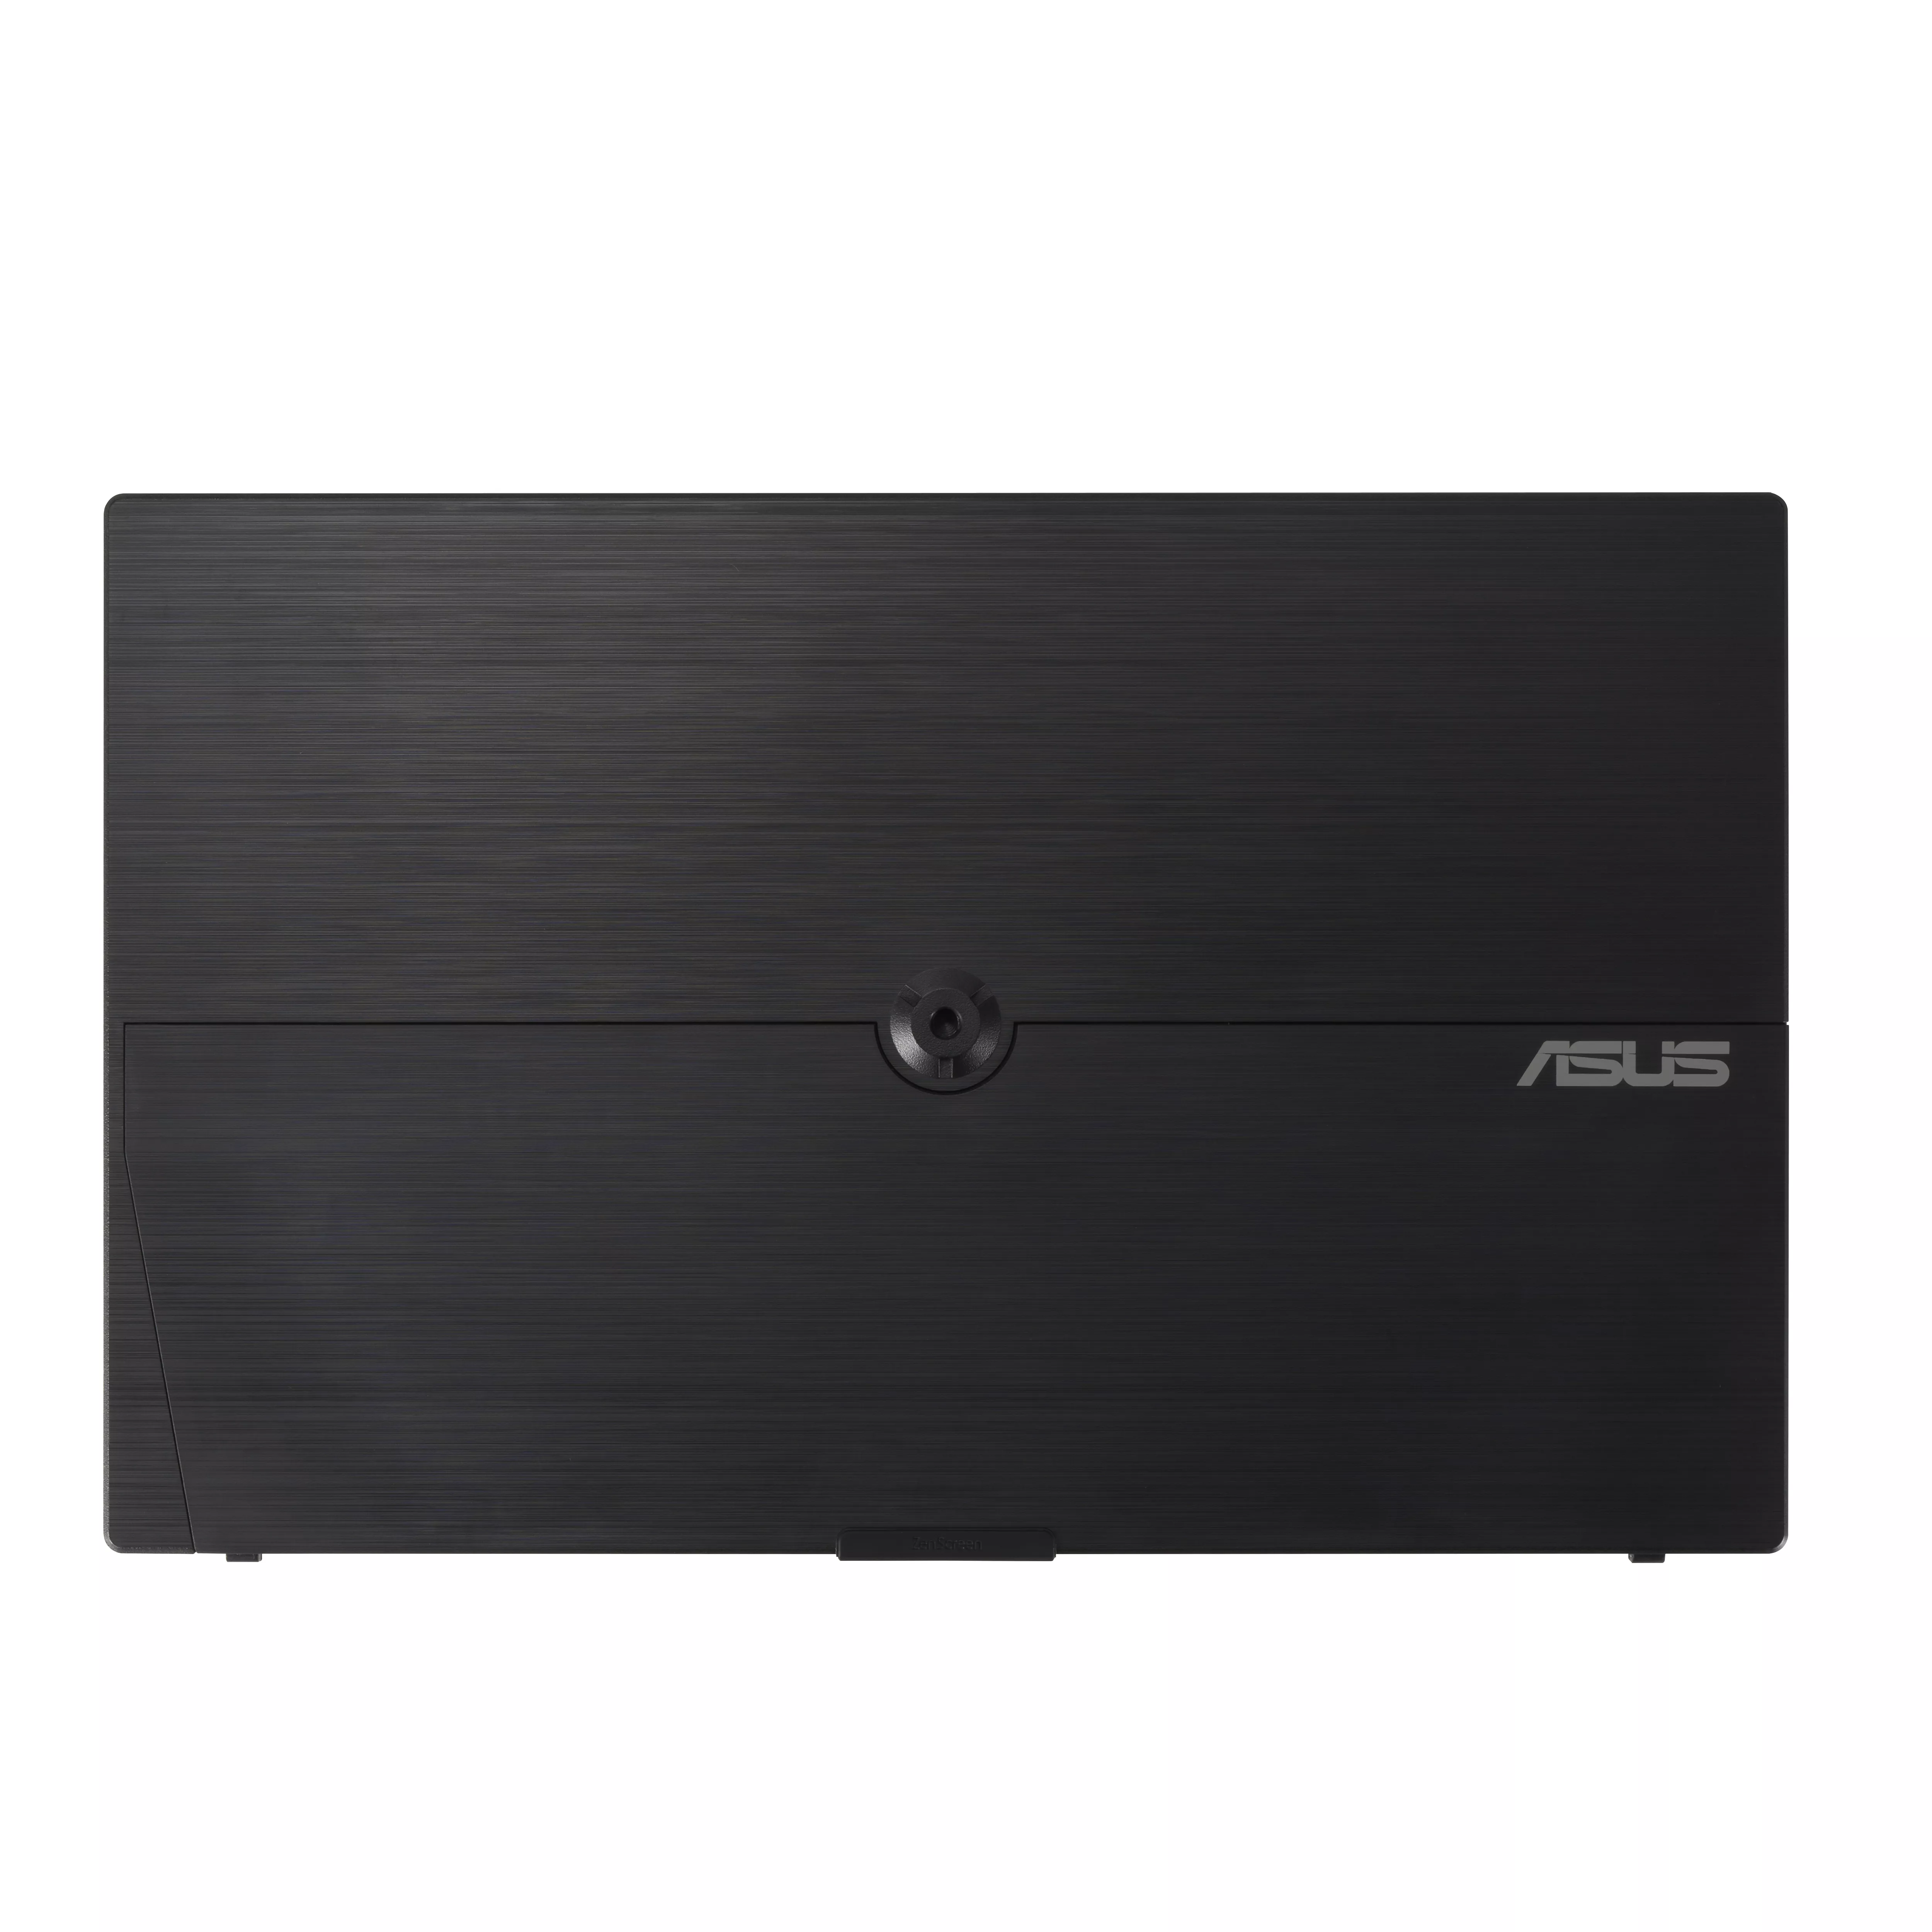 Vente ASUS ZenScreen MB16ACV Portable USB Monitor 15.6p Full ASUS au meilleur prix - visuel 6